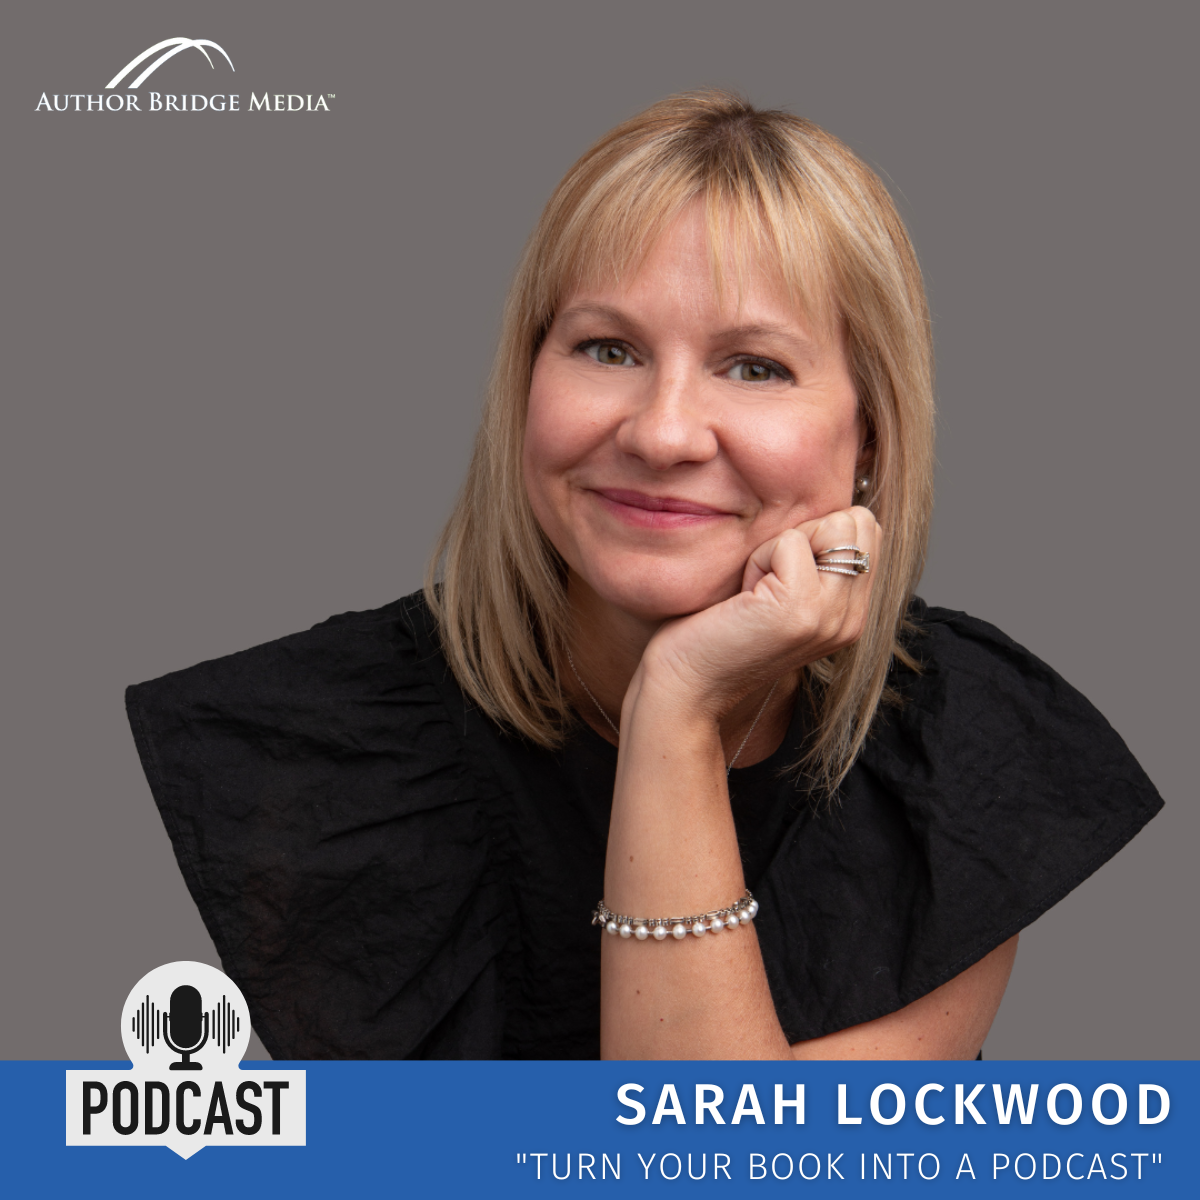 Sara Lockwood books to podcast